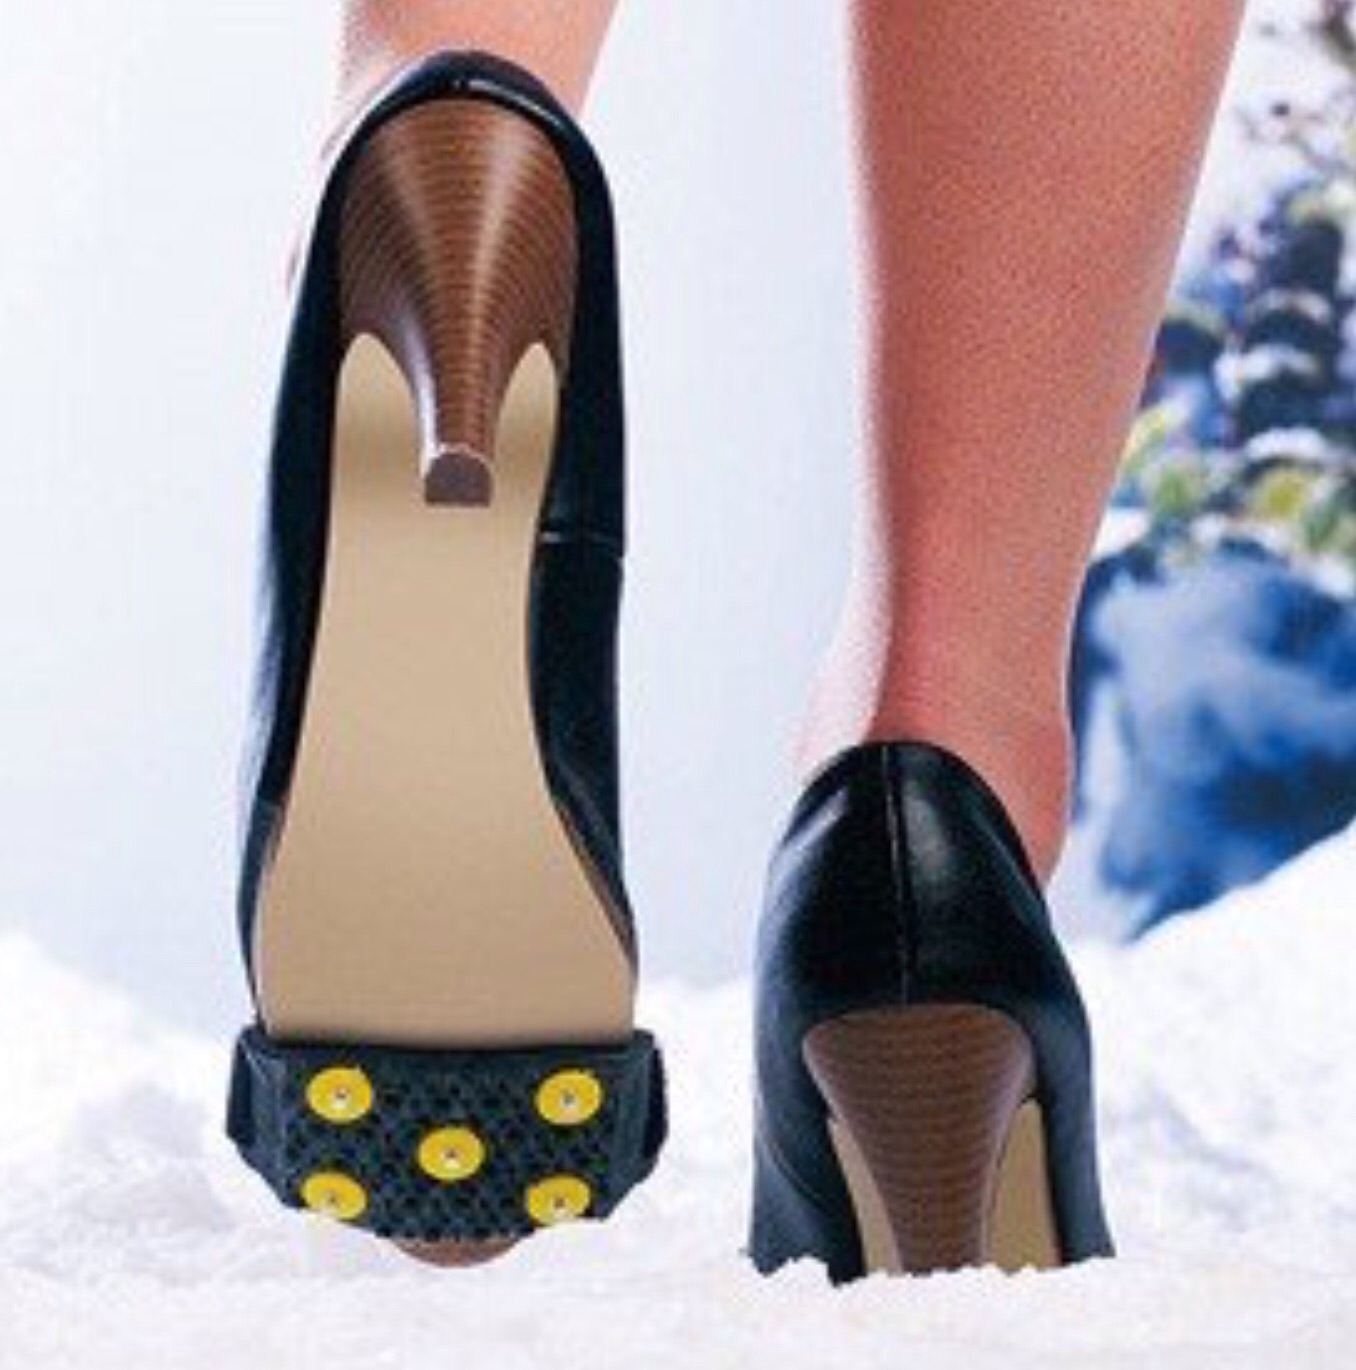 Yaktrax ice grips for high heels